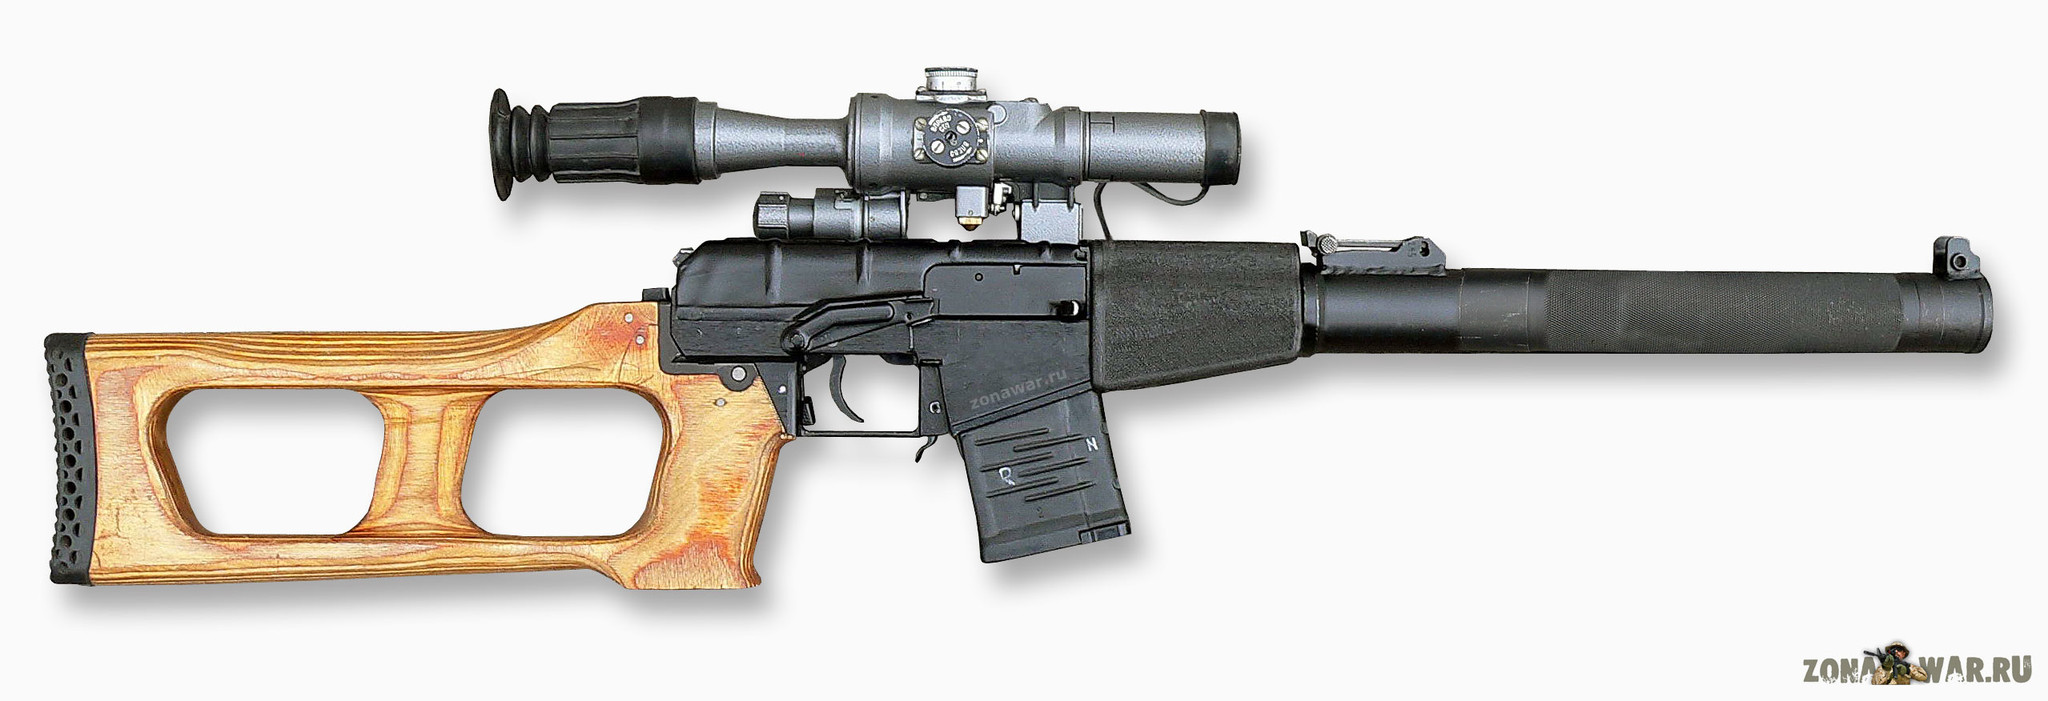 VSS special sniper rifle